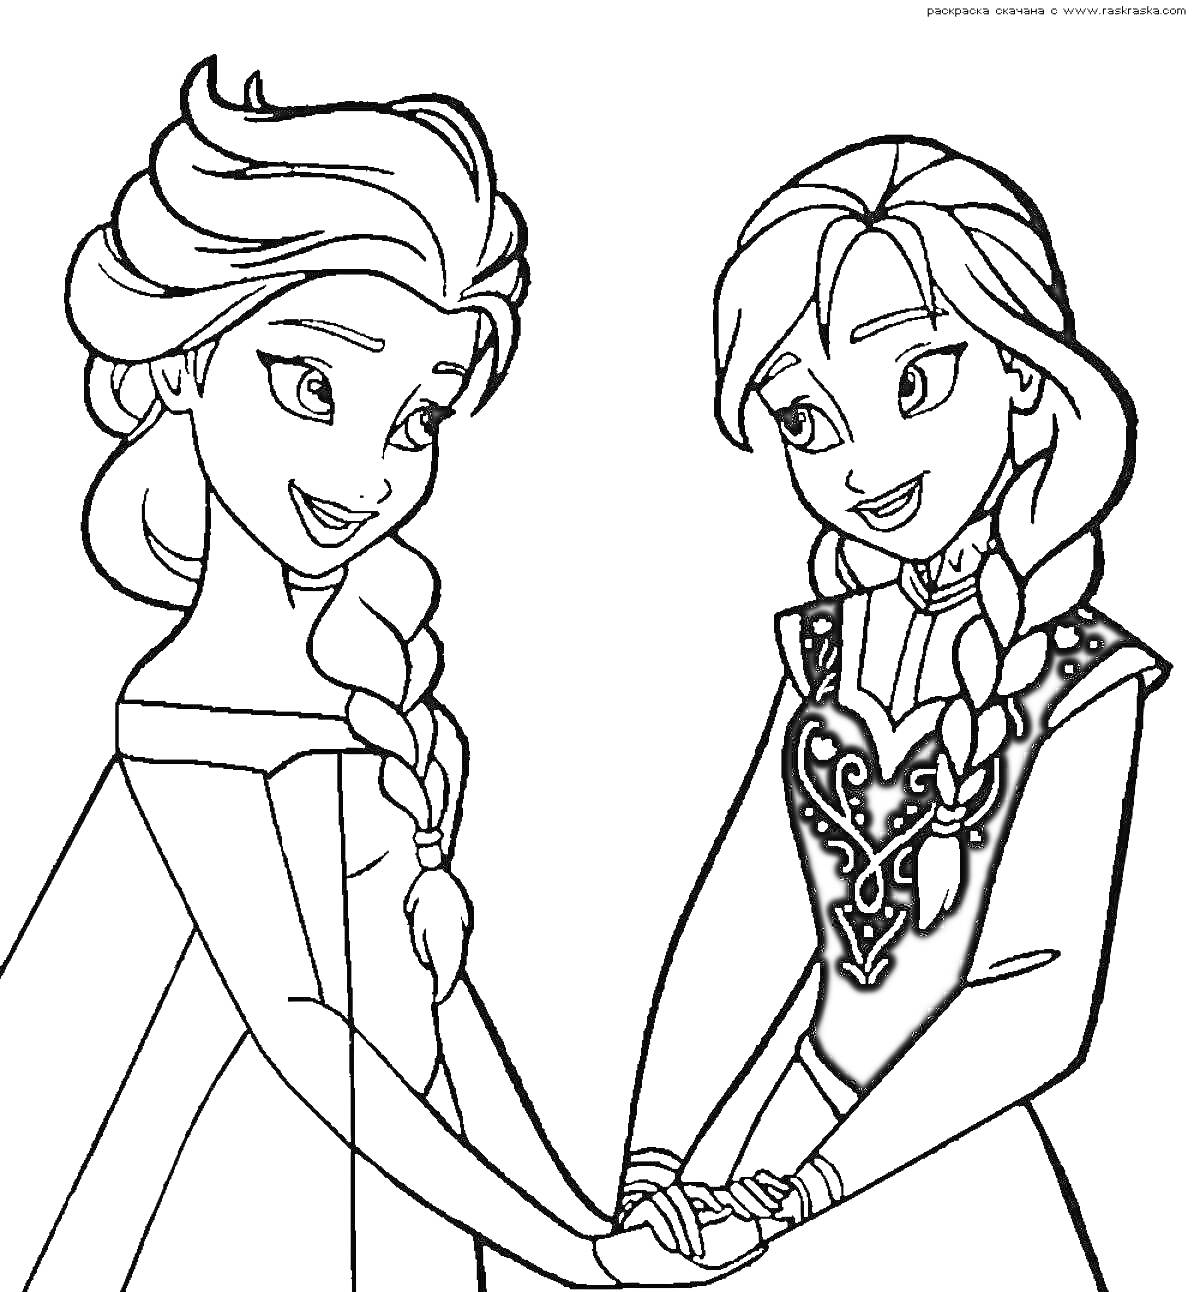 Две девушки с косами держатся за руки.